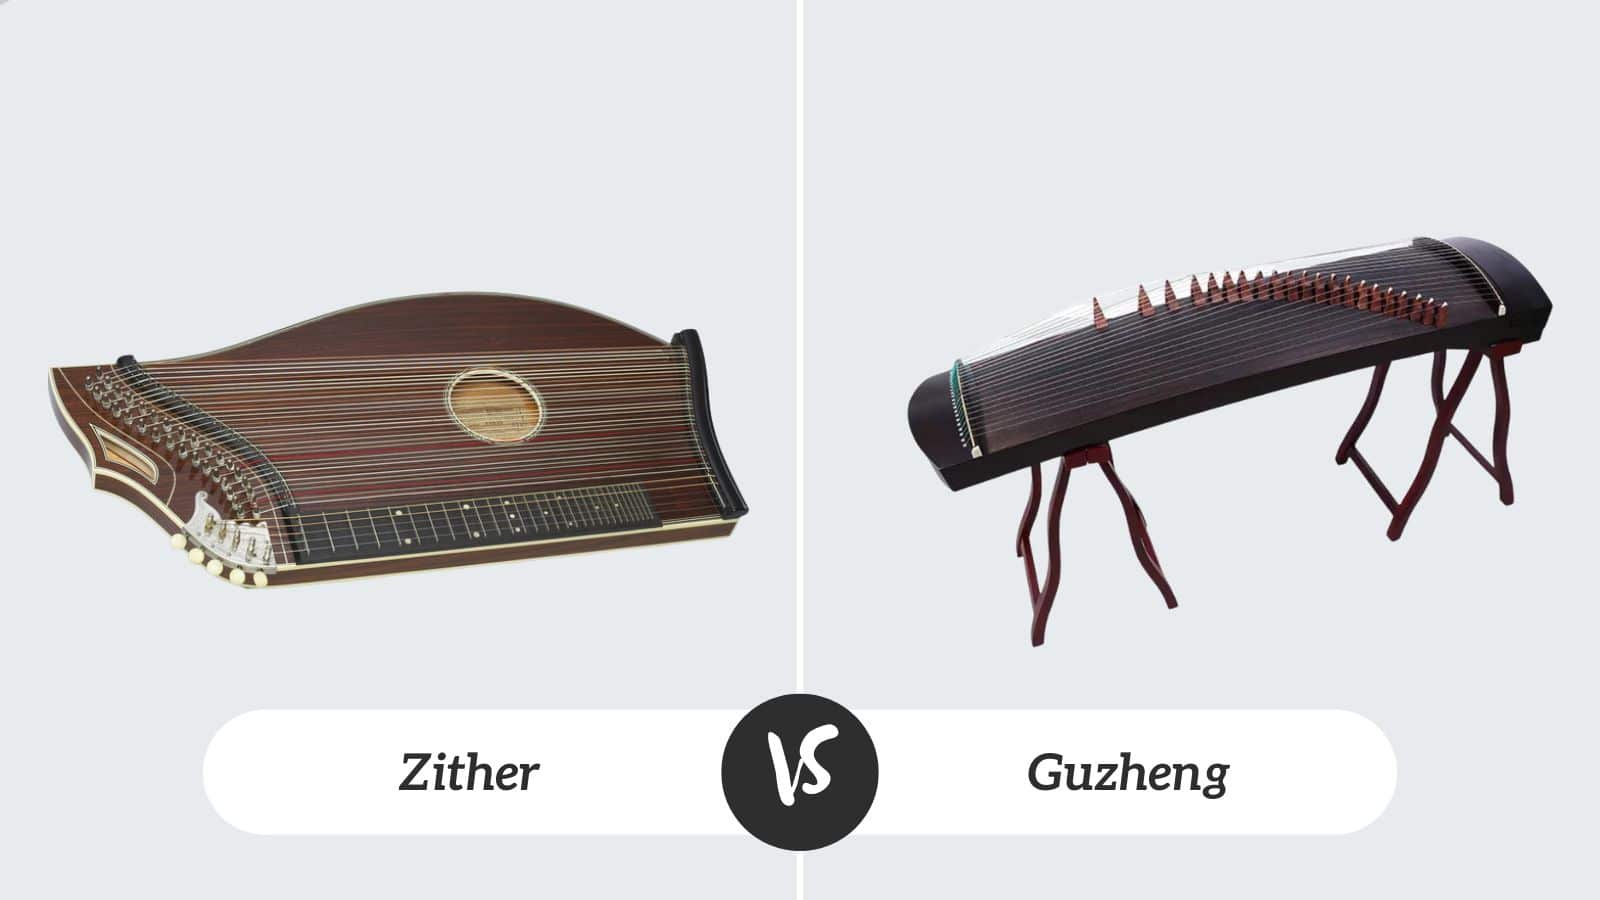 Zither vs Guzheng